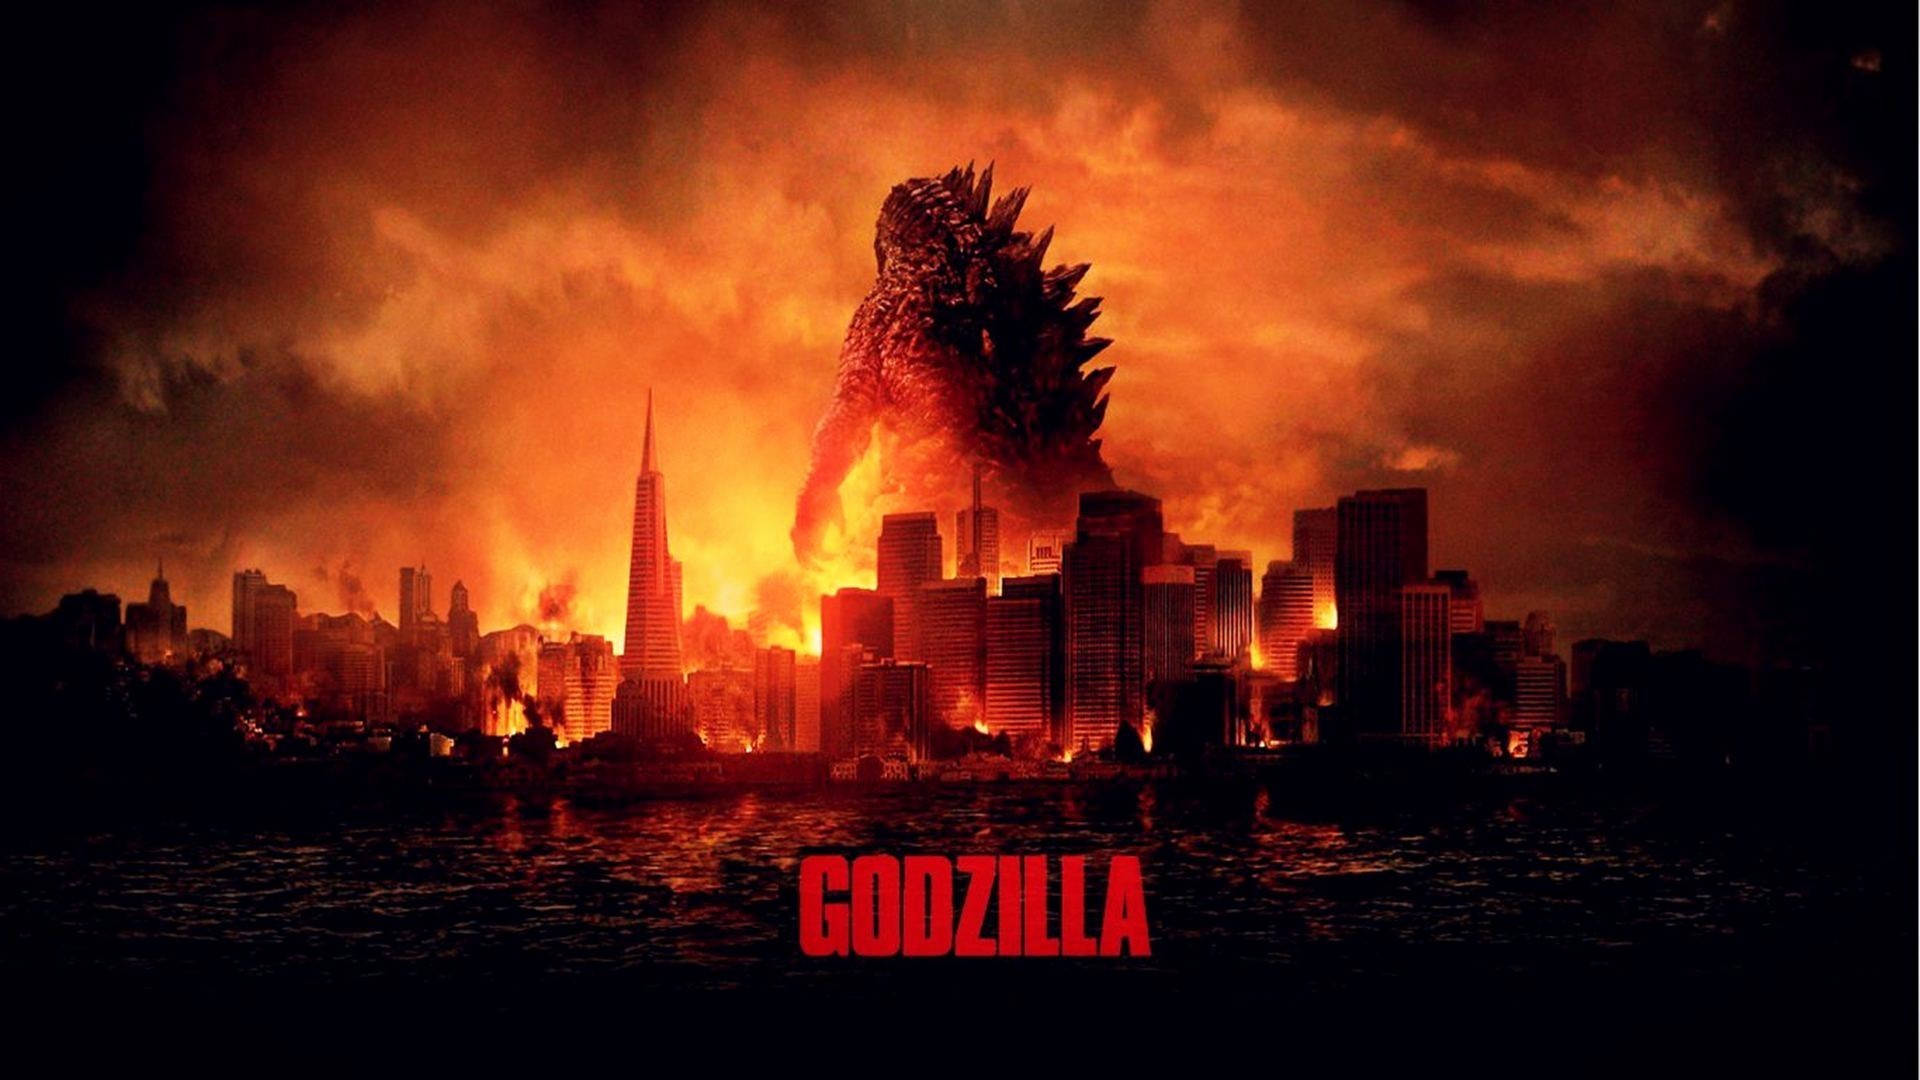 Laespantosa Bestia Shin Godzilla Se Prepara Para Enfrentar A Su Enemigo. Fondo de pantalla